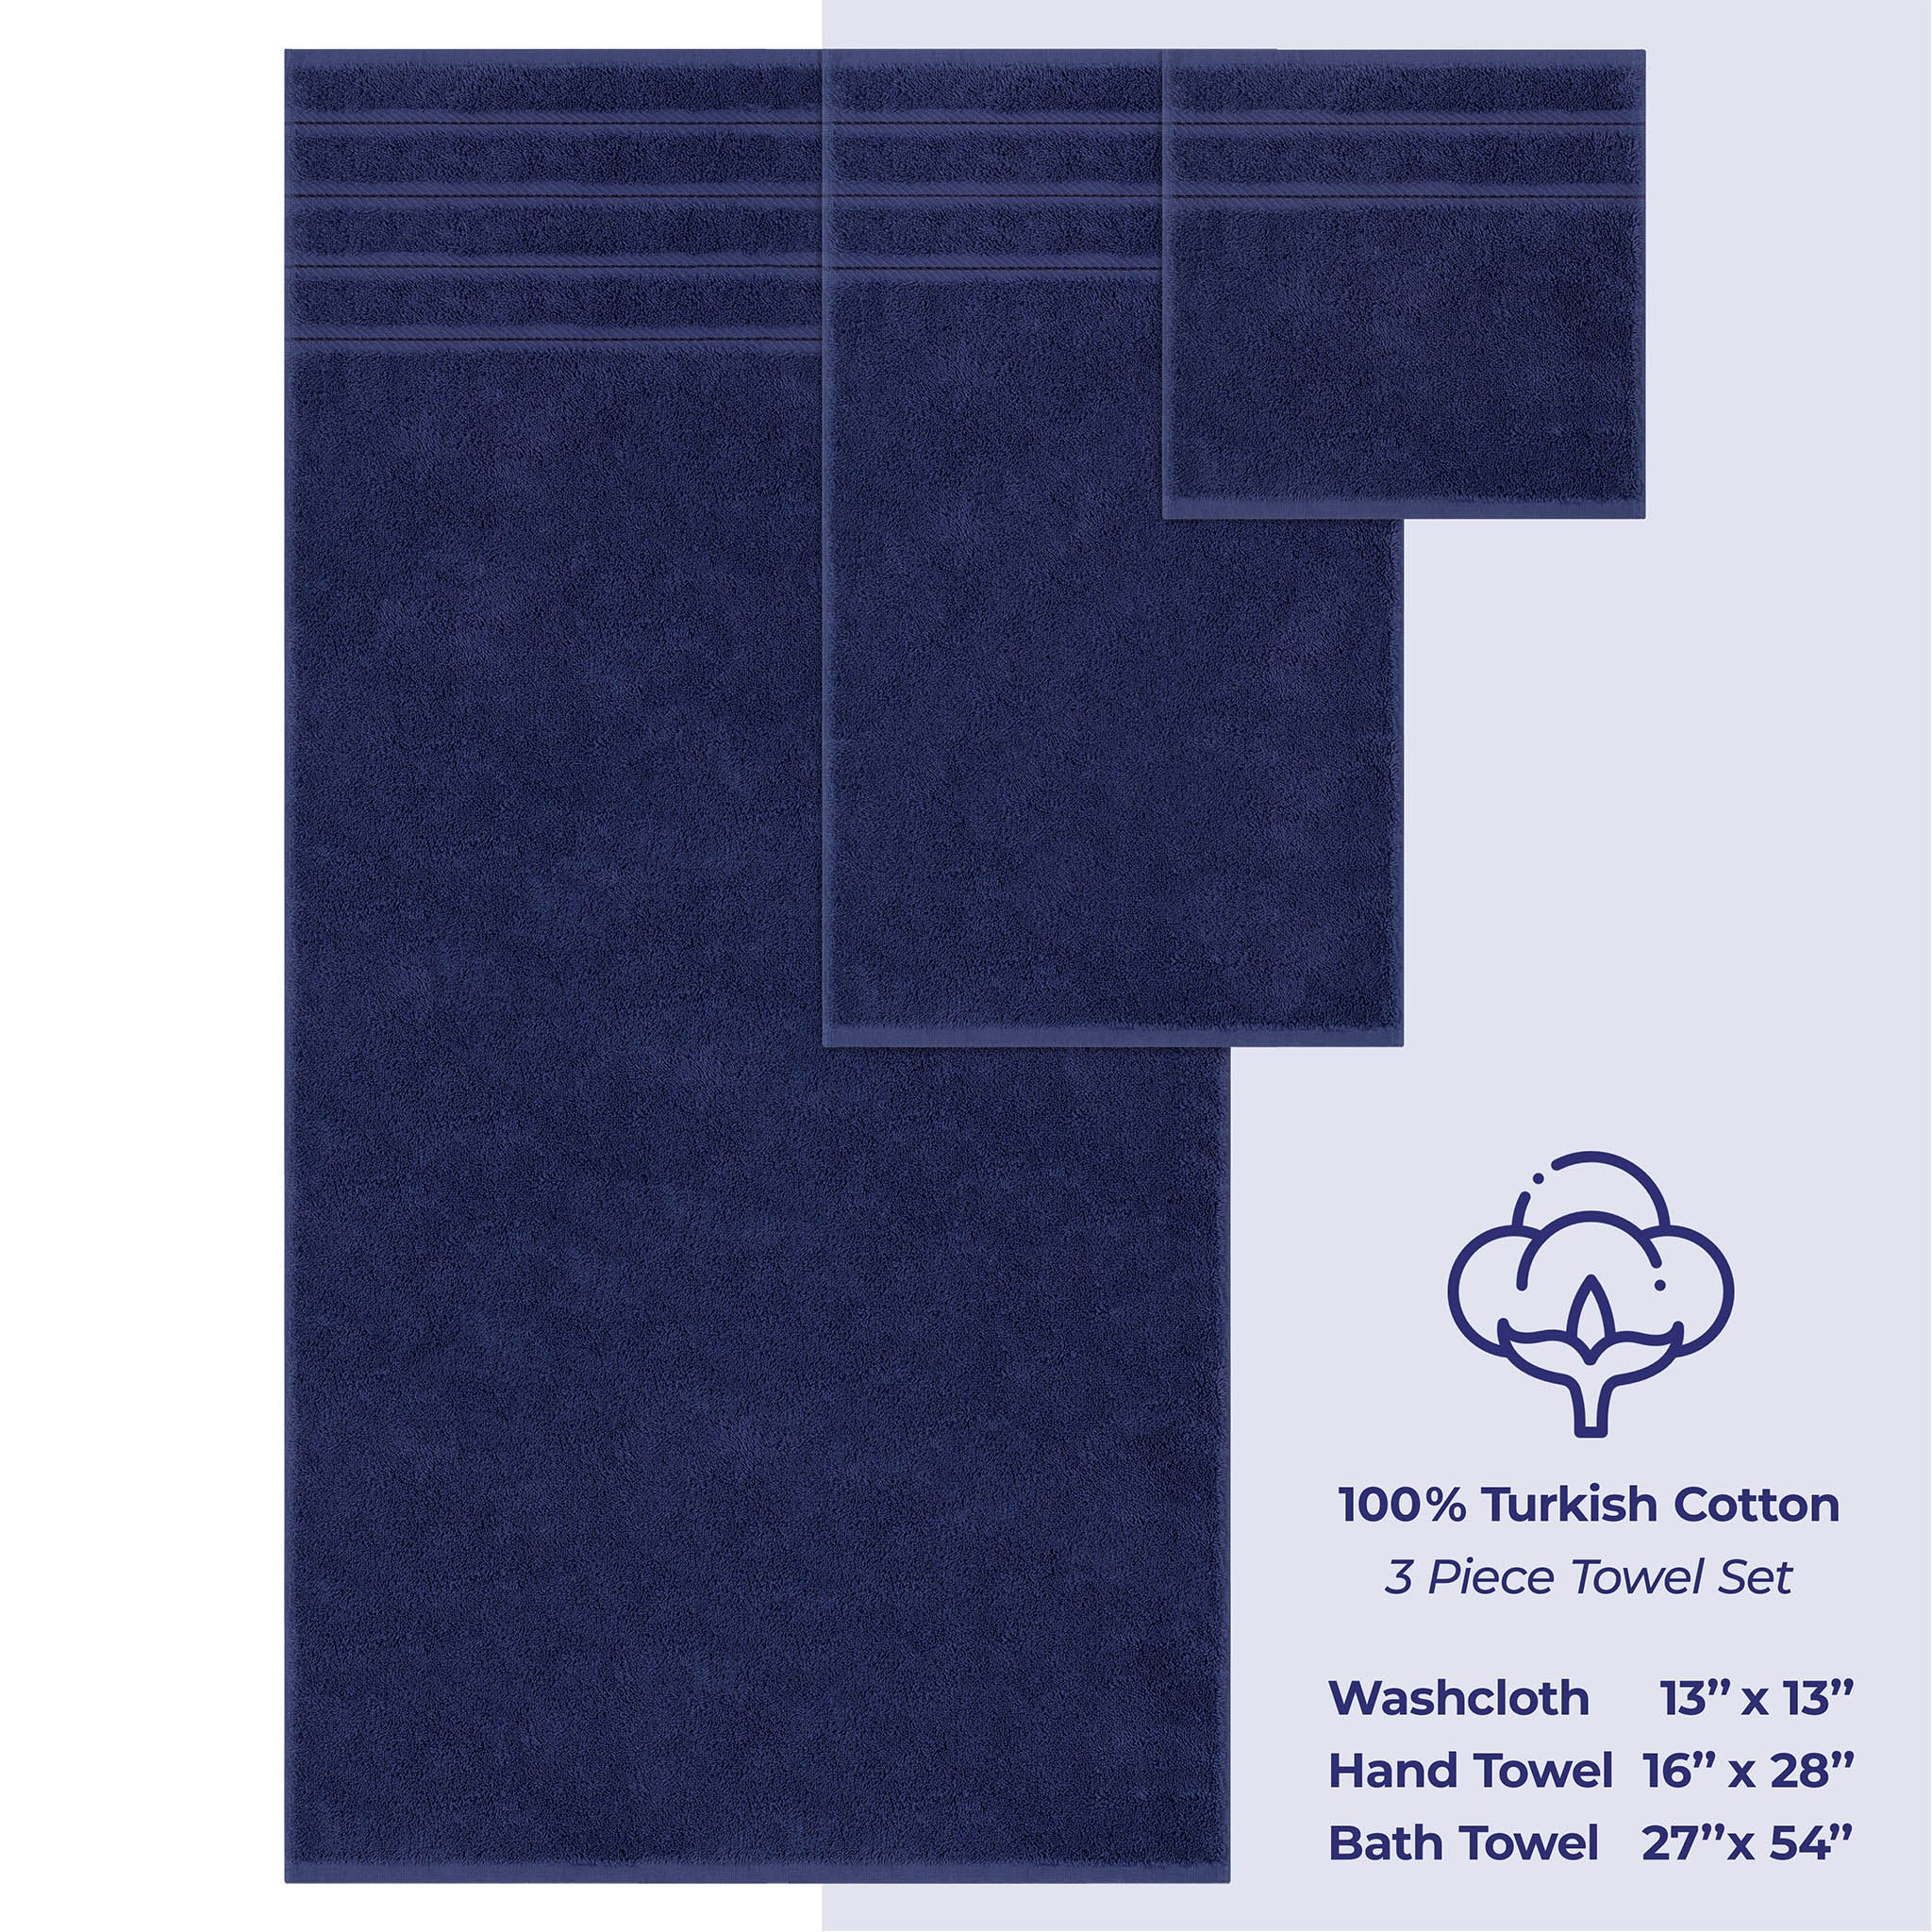 American Soft Linen 3 Piece Luxury Hotel Towel Set 20 set case pack navy-blue-4